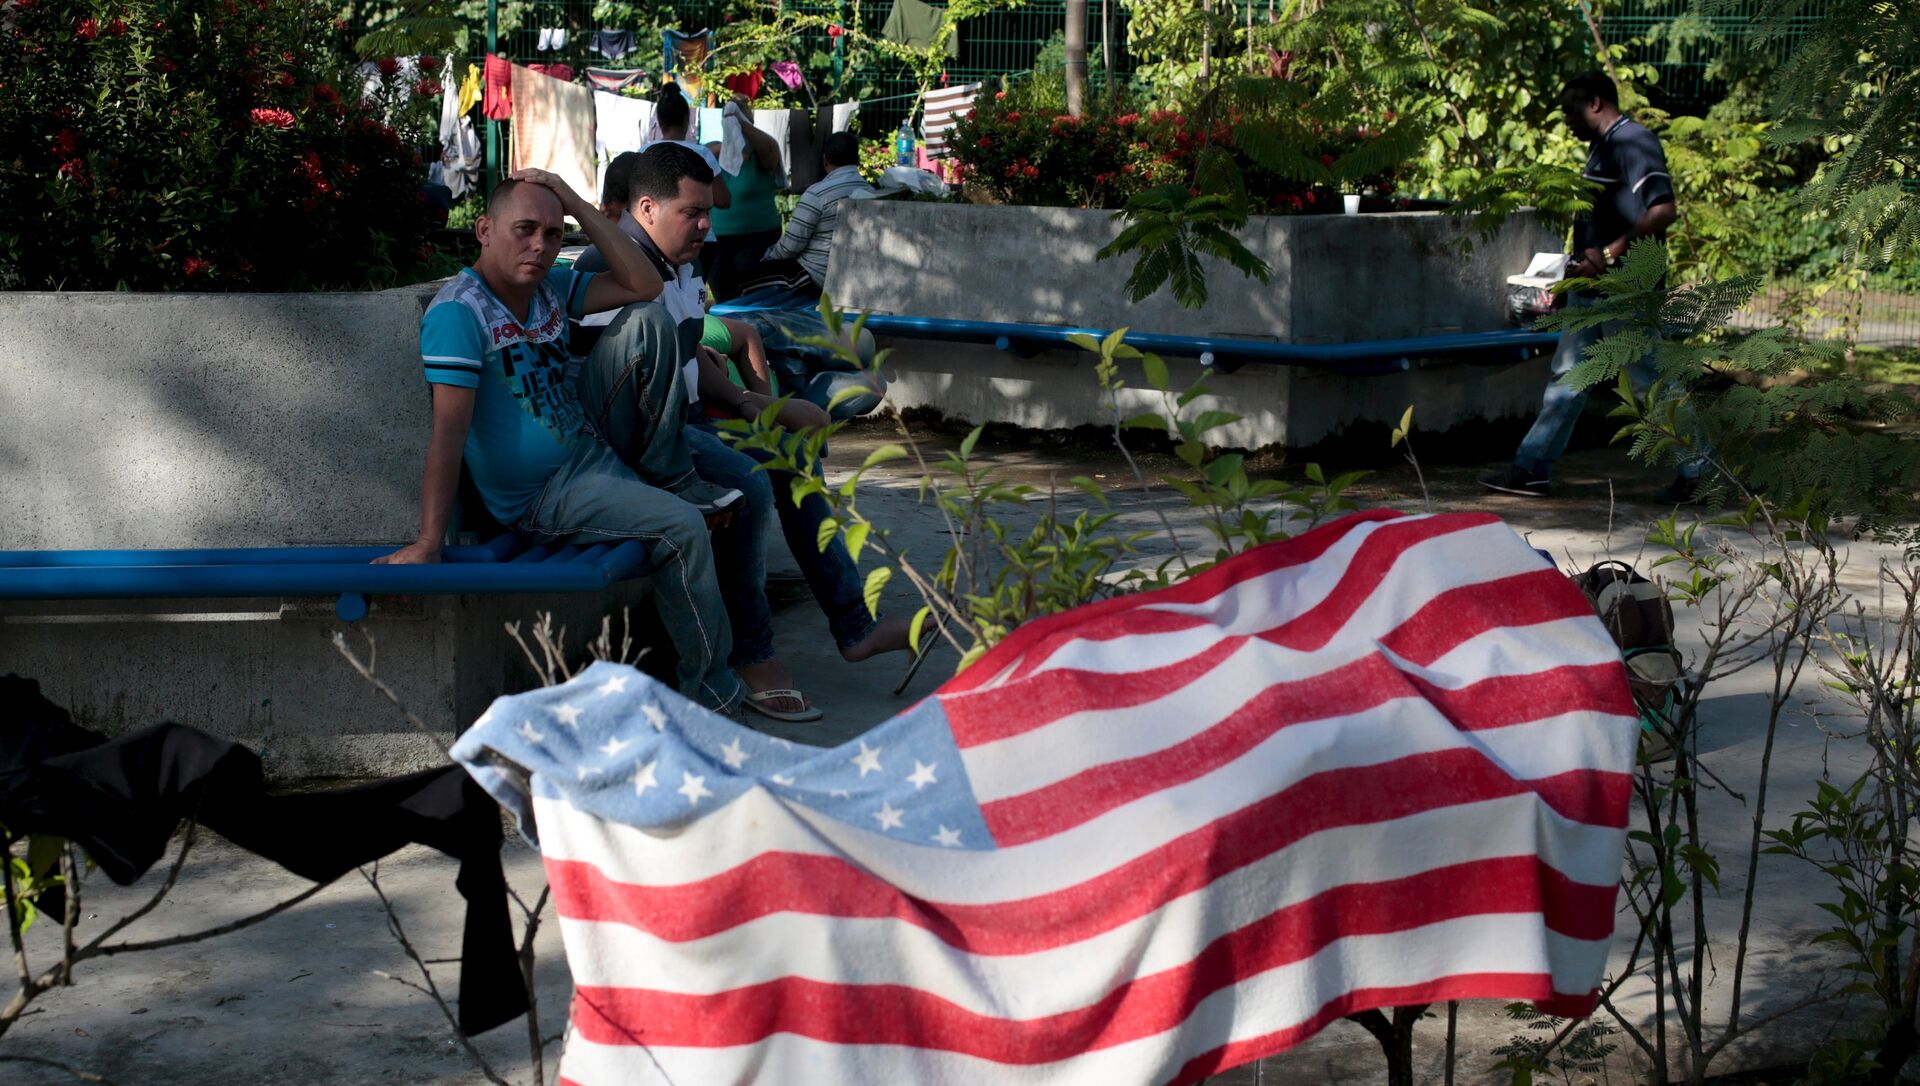 Cuban migrants sit near a beach towel with the U.S. flag - Sputnik Mundo, 1920, 04.02.2021